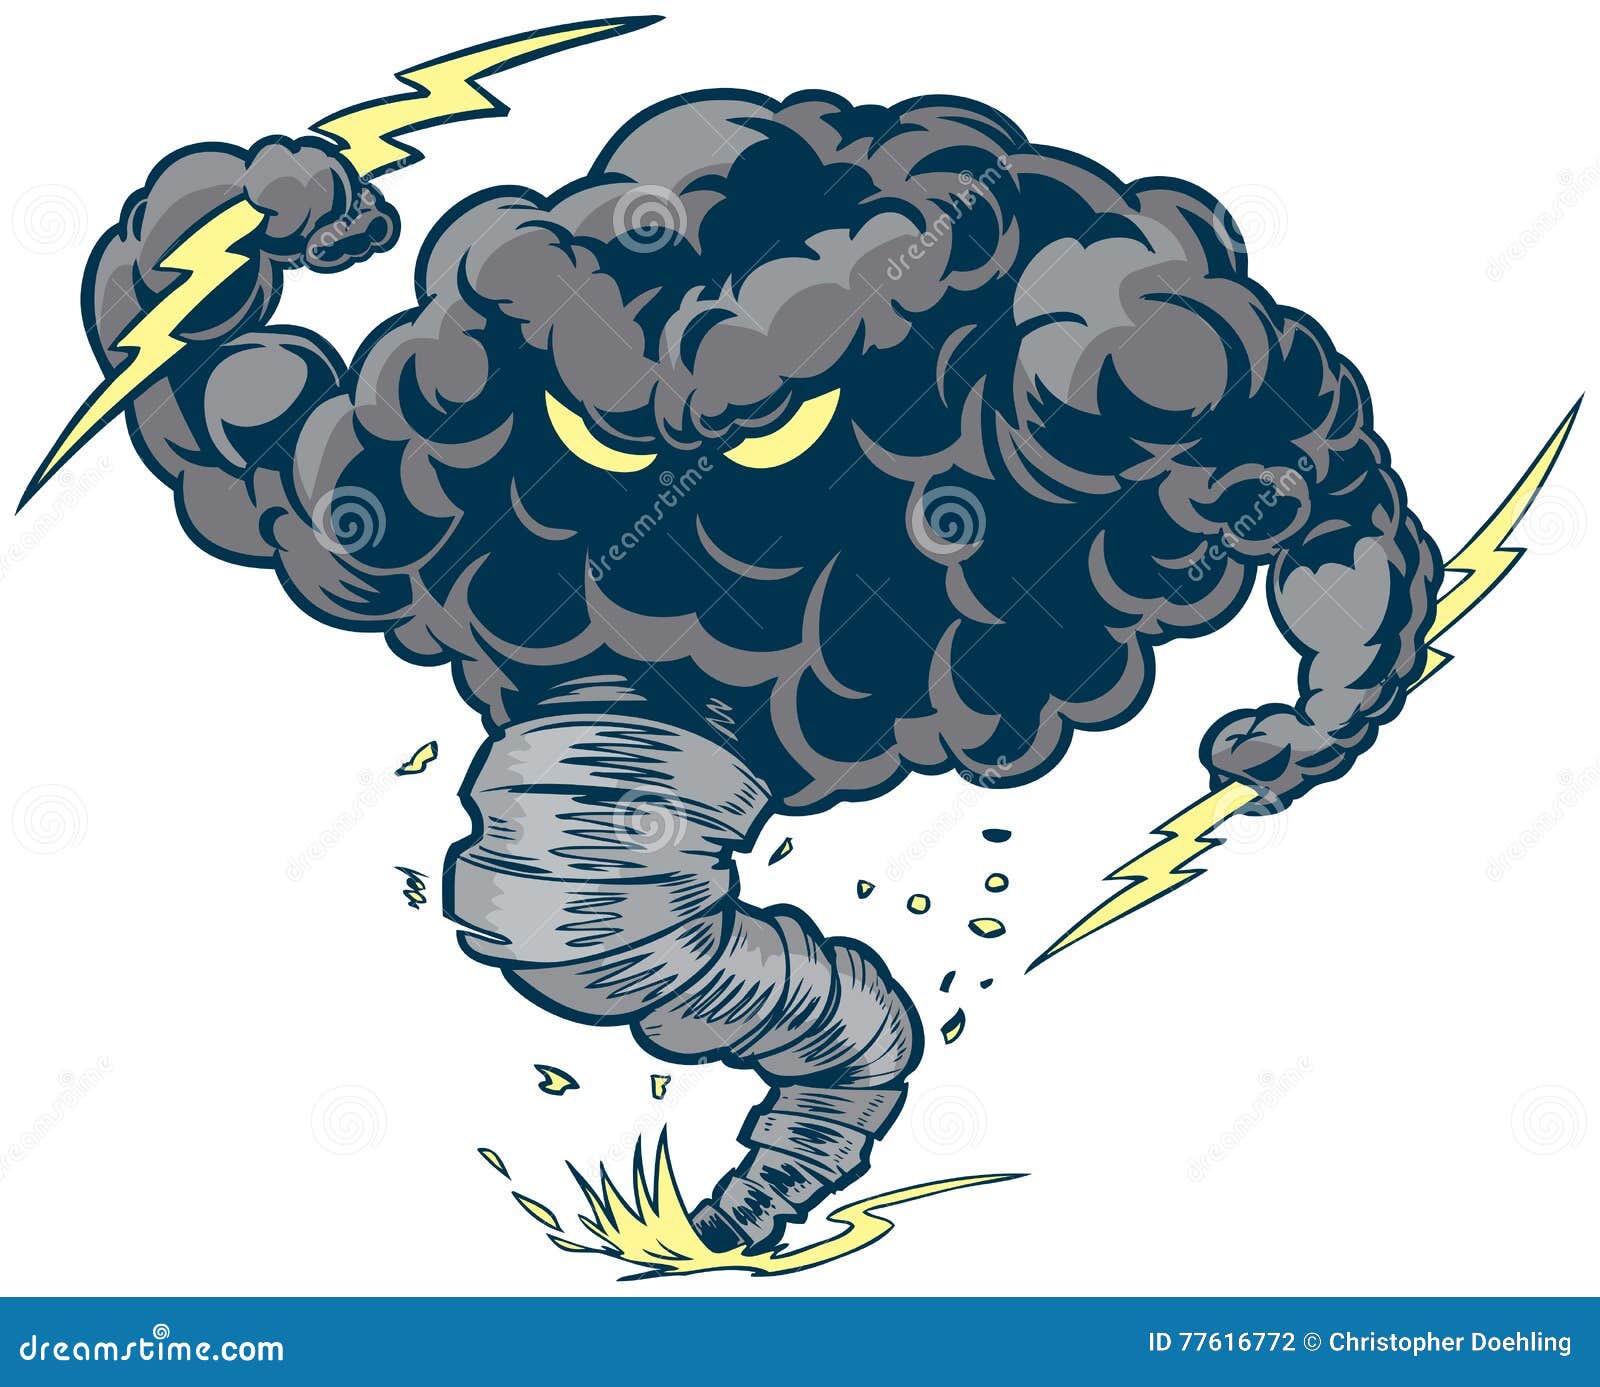  thunder cloud storm tornado mascot with lightning bolts